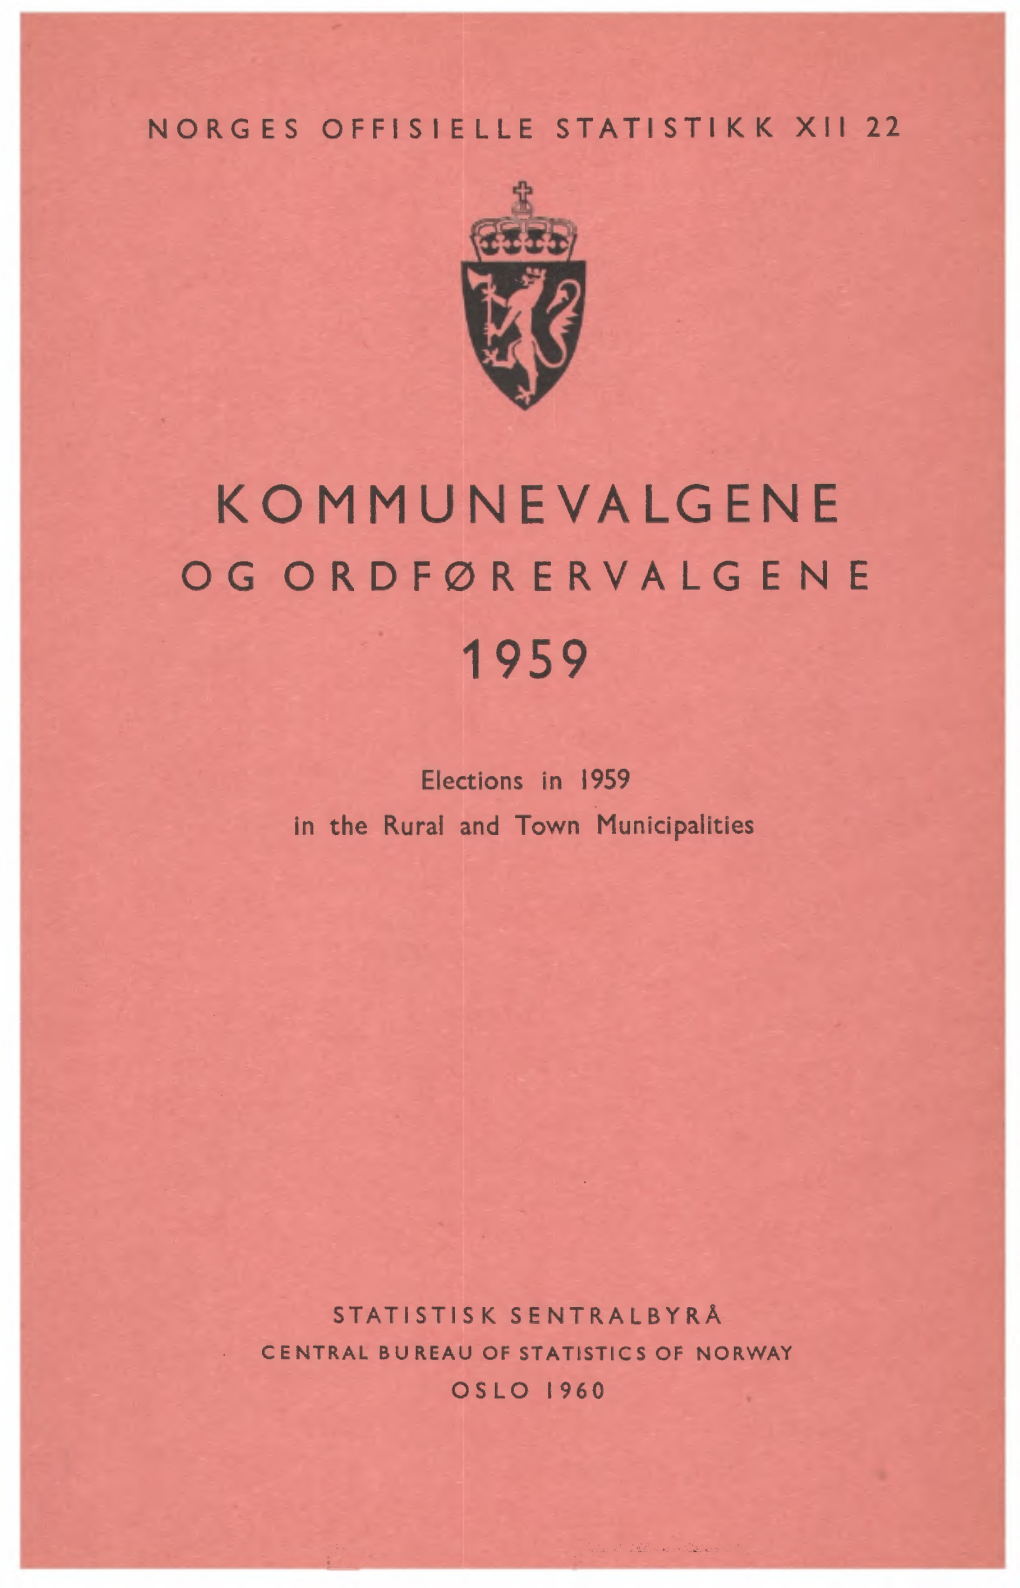 Kommunevalgene Og Ordførervalgene 1959 Elections in the Rural and Town Municipalities �O�G ES O��IS I E ��E S�A�IS�IK K �II 22